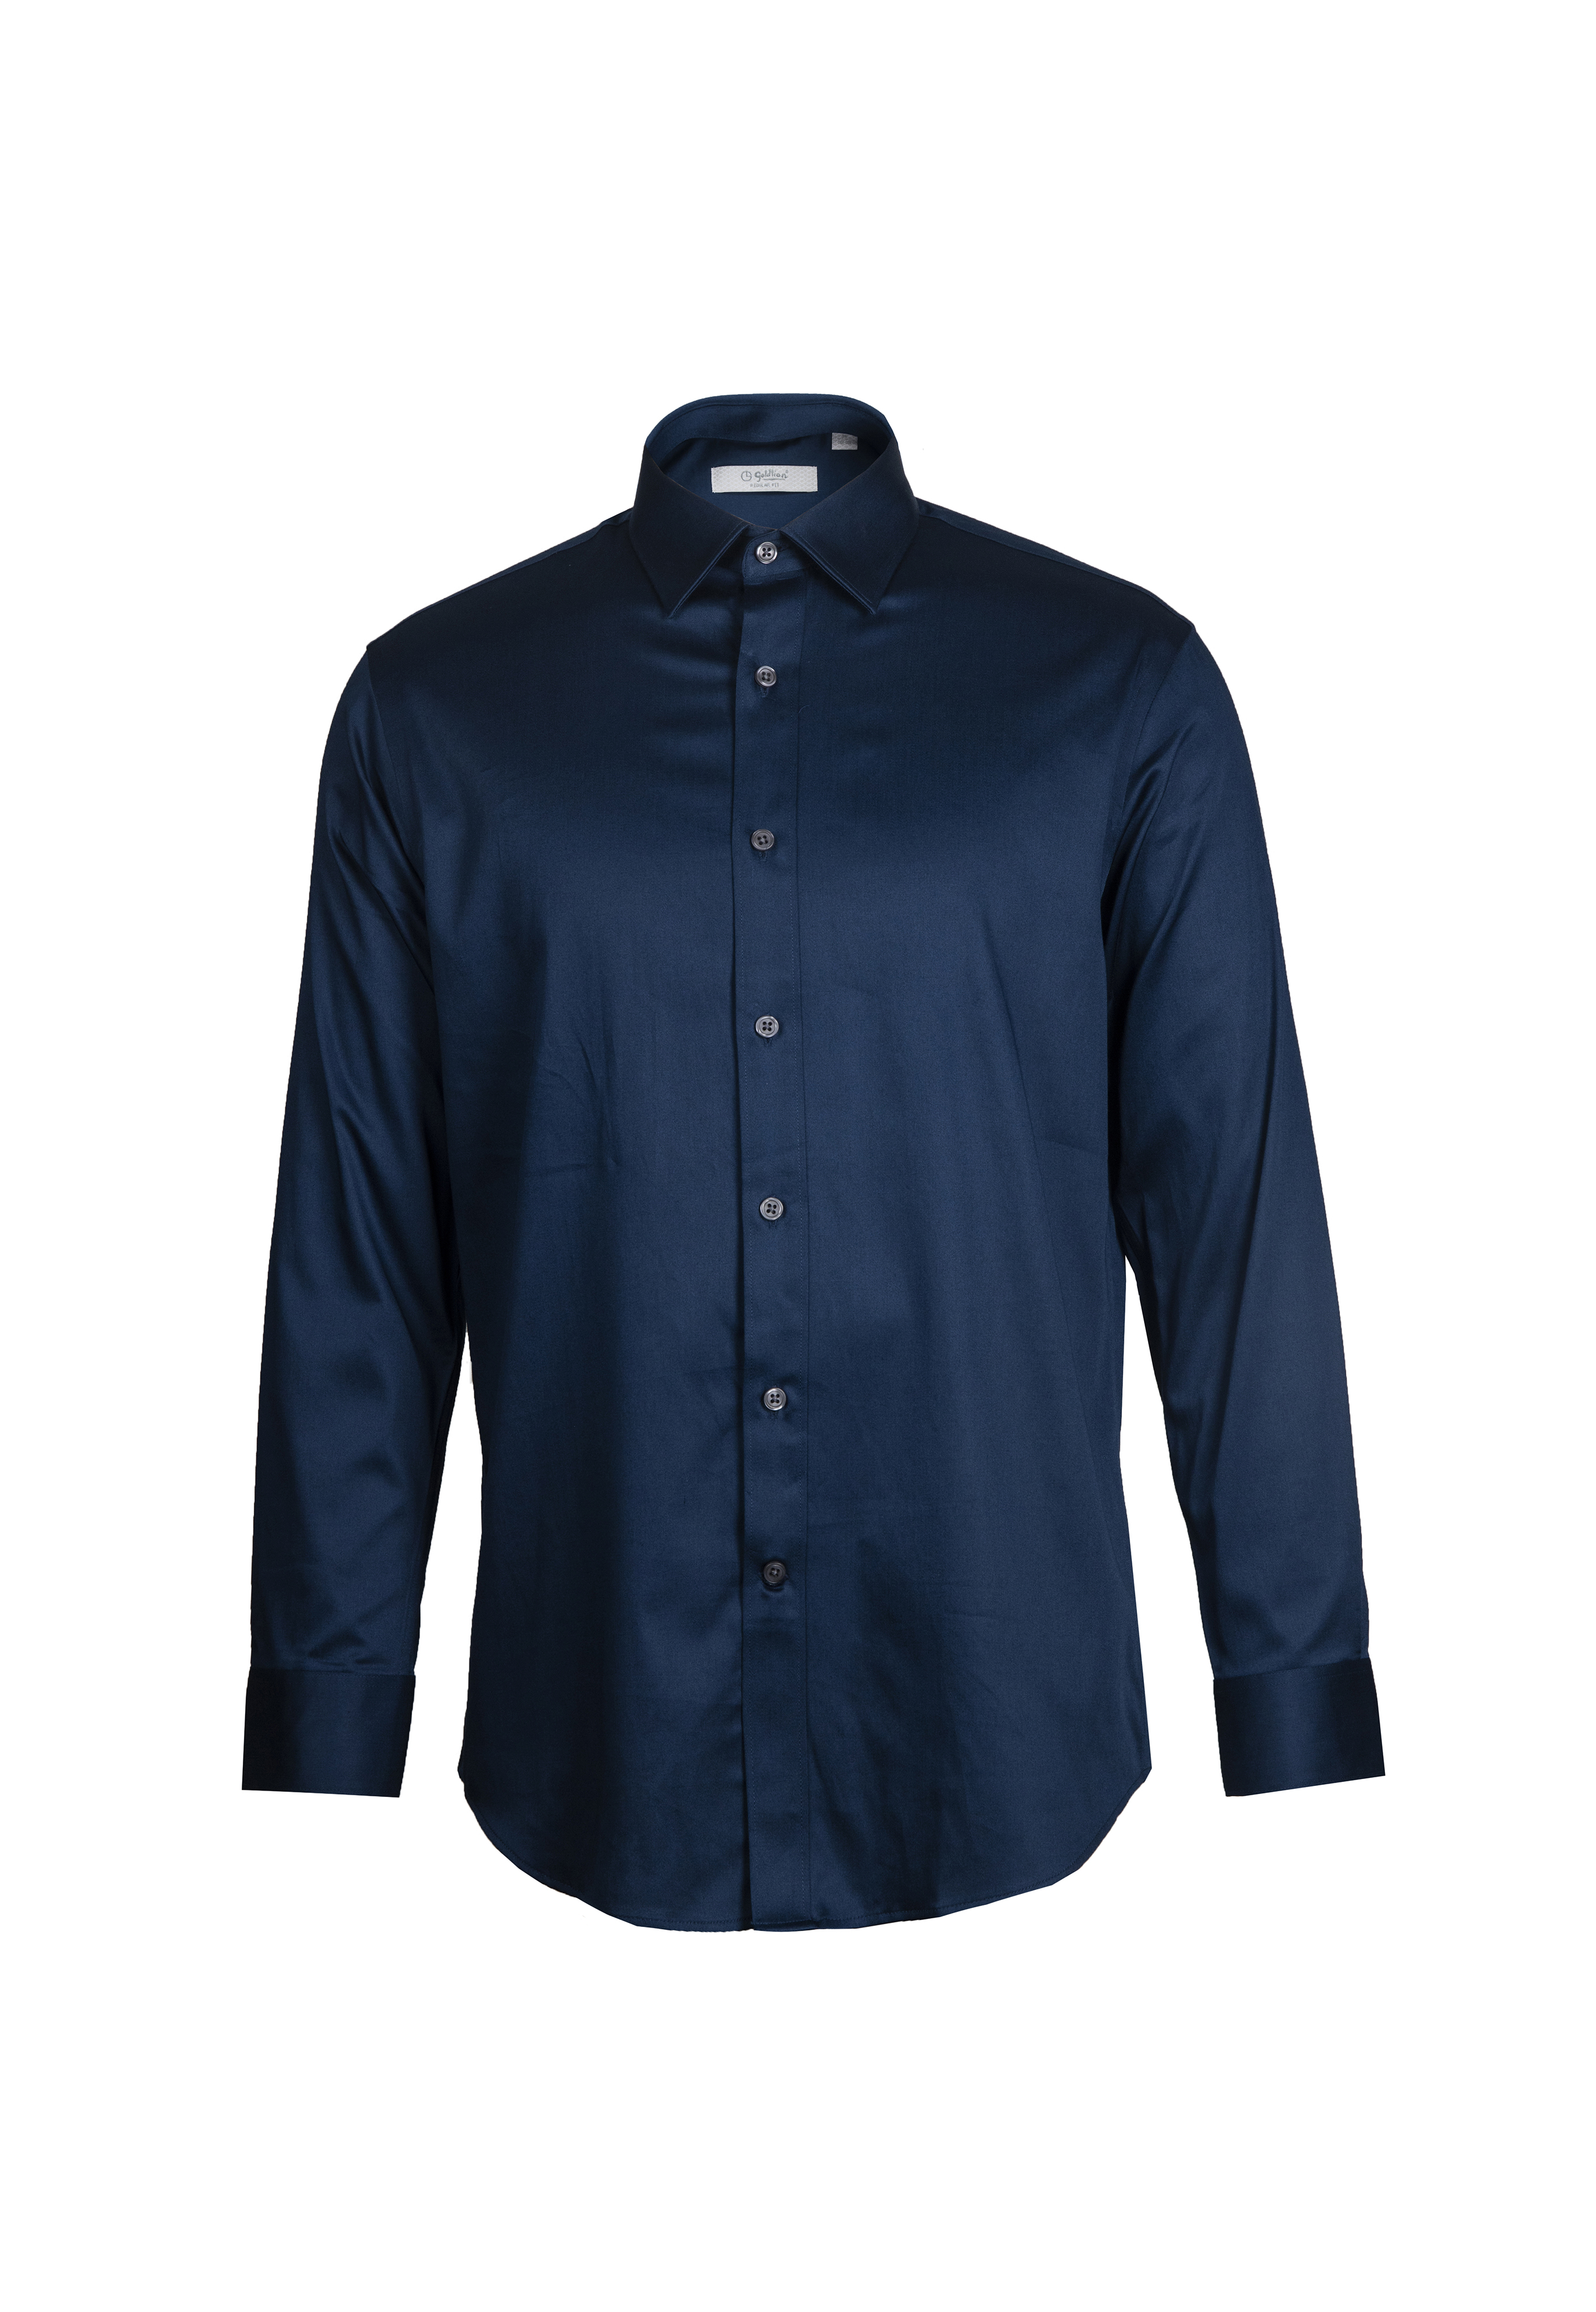 [Online Exclusive] Goldlion Business Regular Fit Long-Sleeved Shirt (Navy)